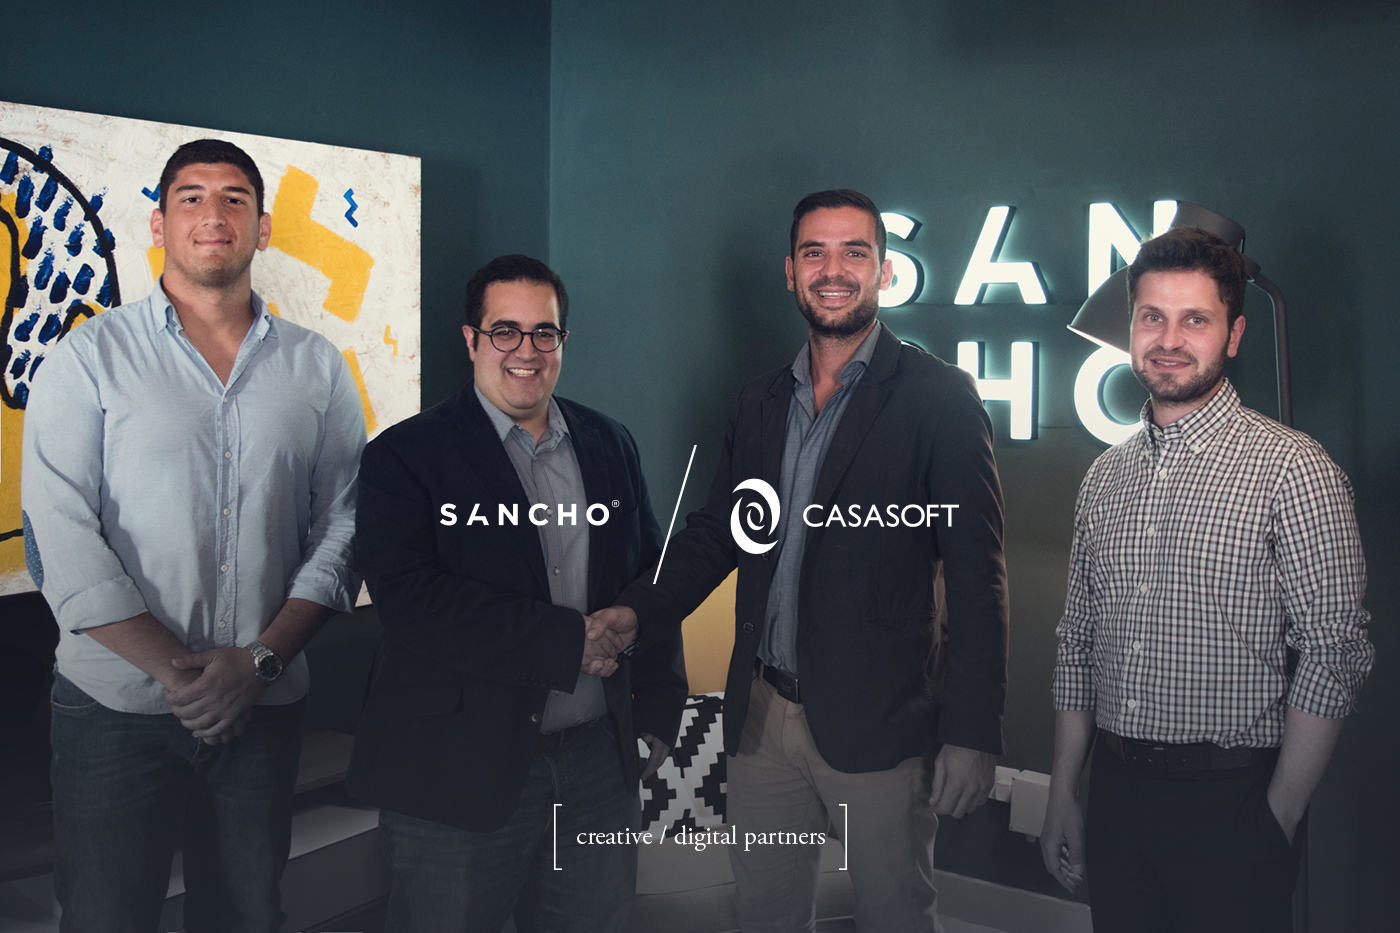 From left to right: Matthew Spiteri, Sancho's Creative Director, Mario Cachia, Sancho's Managing Director, Mark Cassar, CasaSoft's Managing Director, David Demicoli, CasaSoft's Business Development Manager